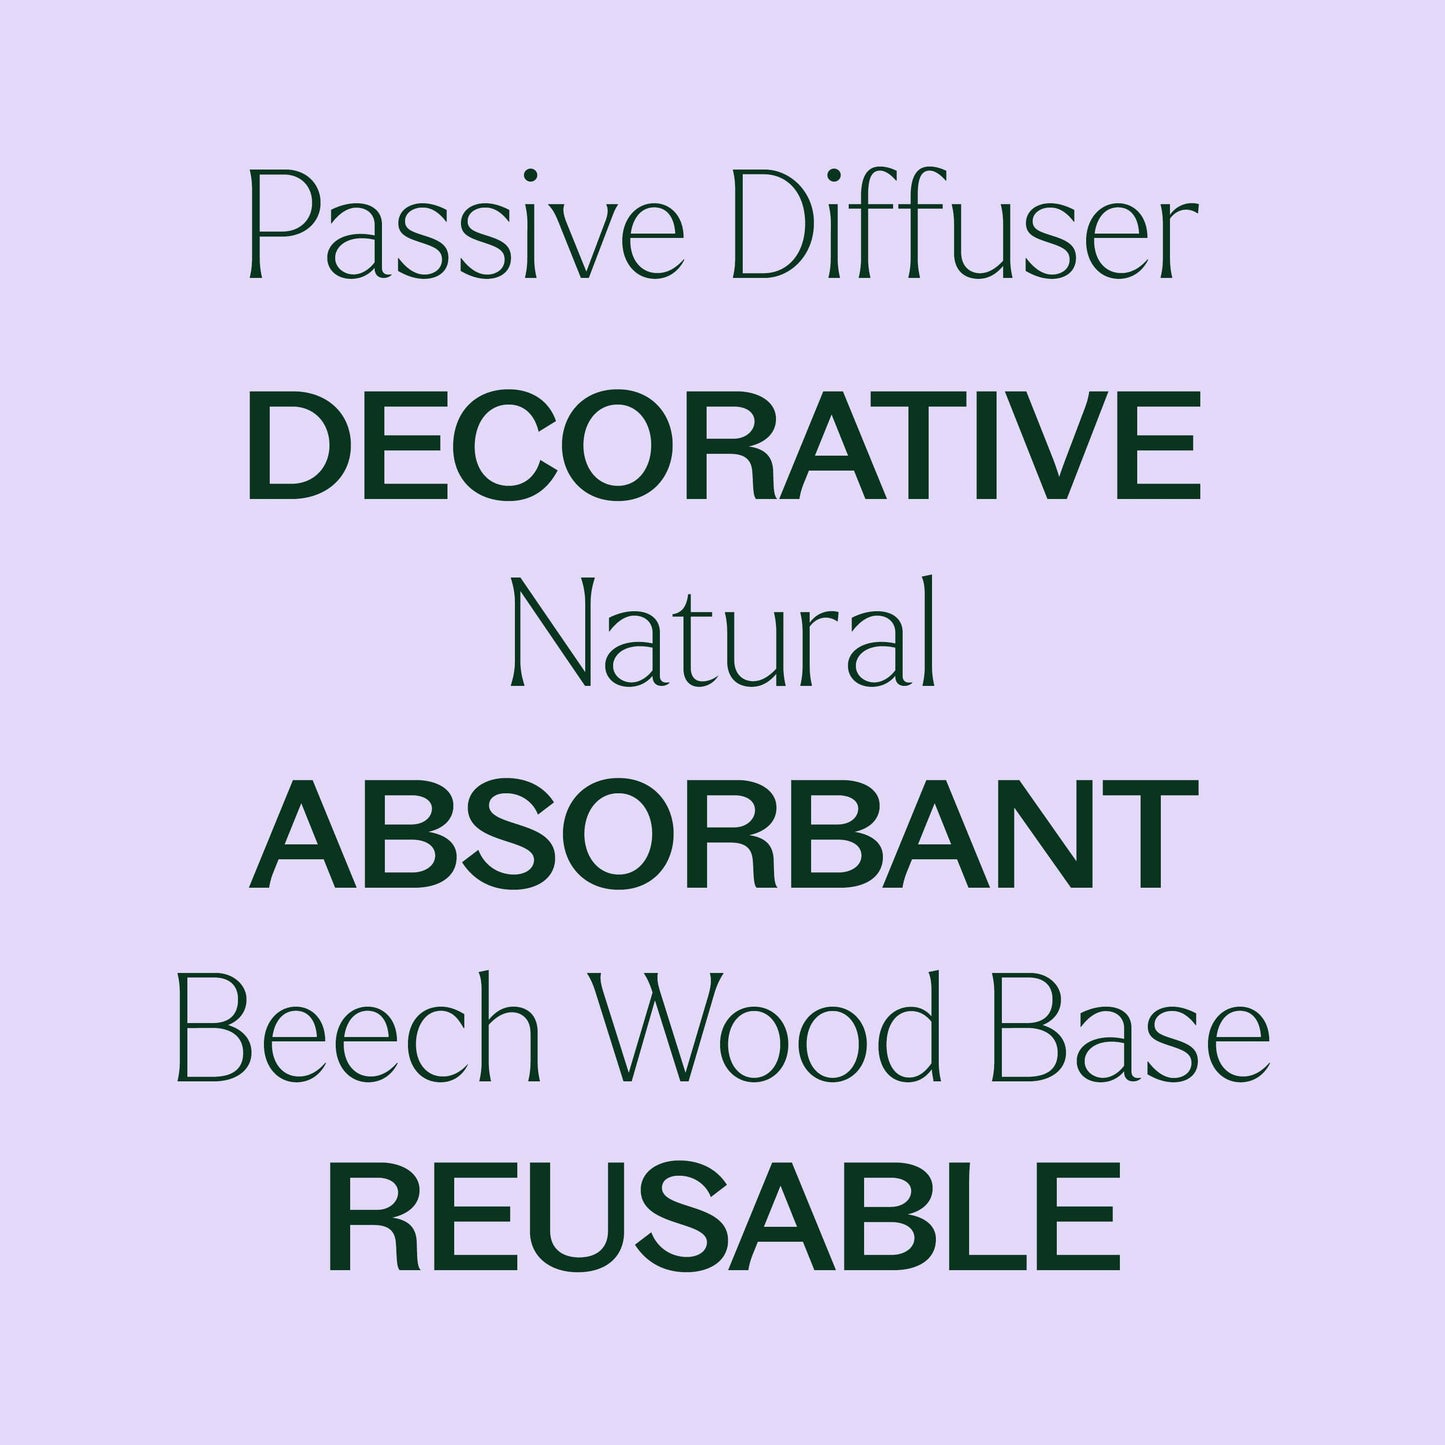 Passive Lotus Diffuser decorative, natural, absorbent, beech wood base, reusable 